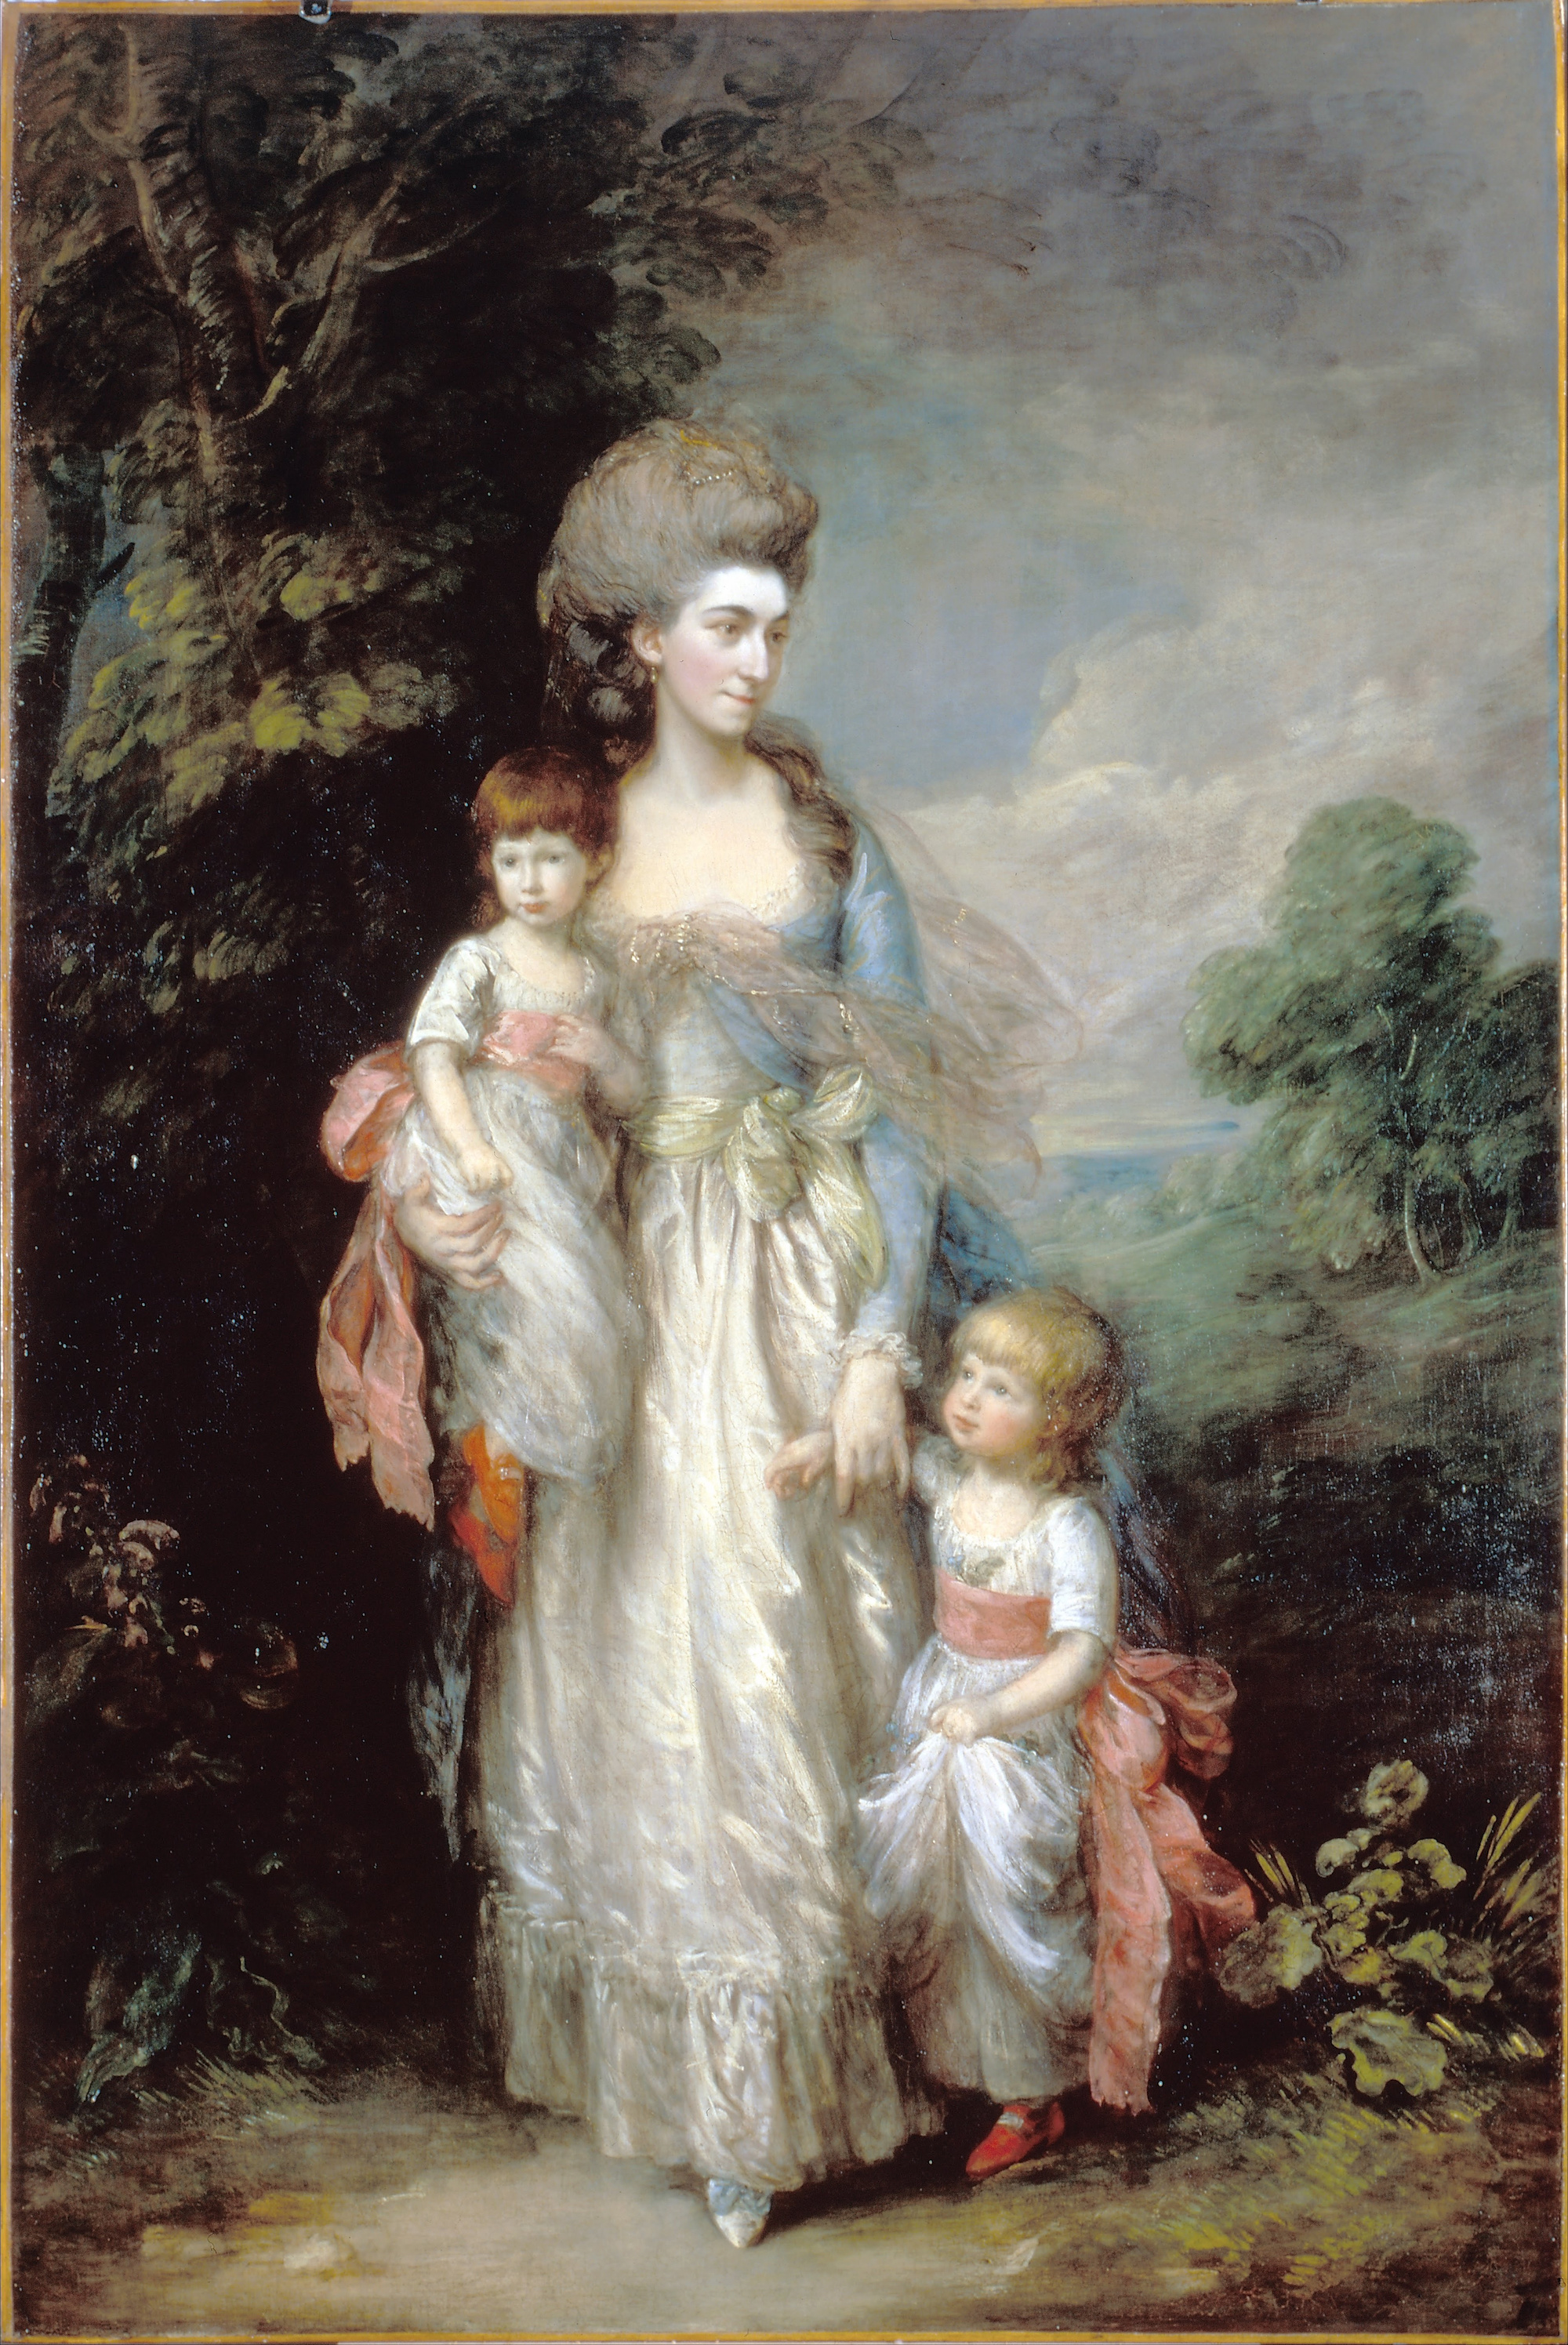 Bayan Elizabeth Moody oğulları Samuel ve Thomas ile by Thomas Gainsborough - c. 1779 - 85 - 154.2 x 234 cm 